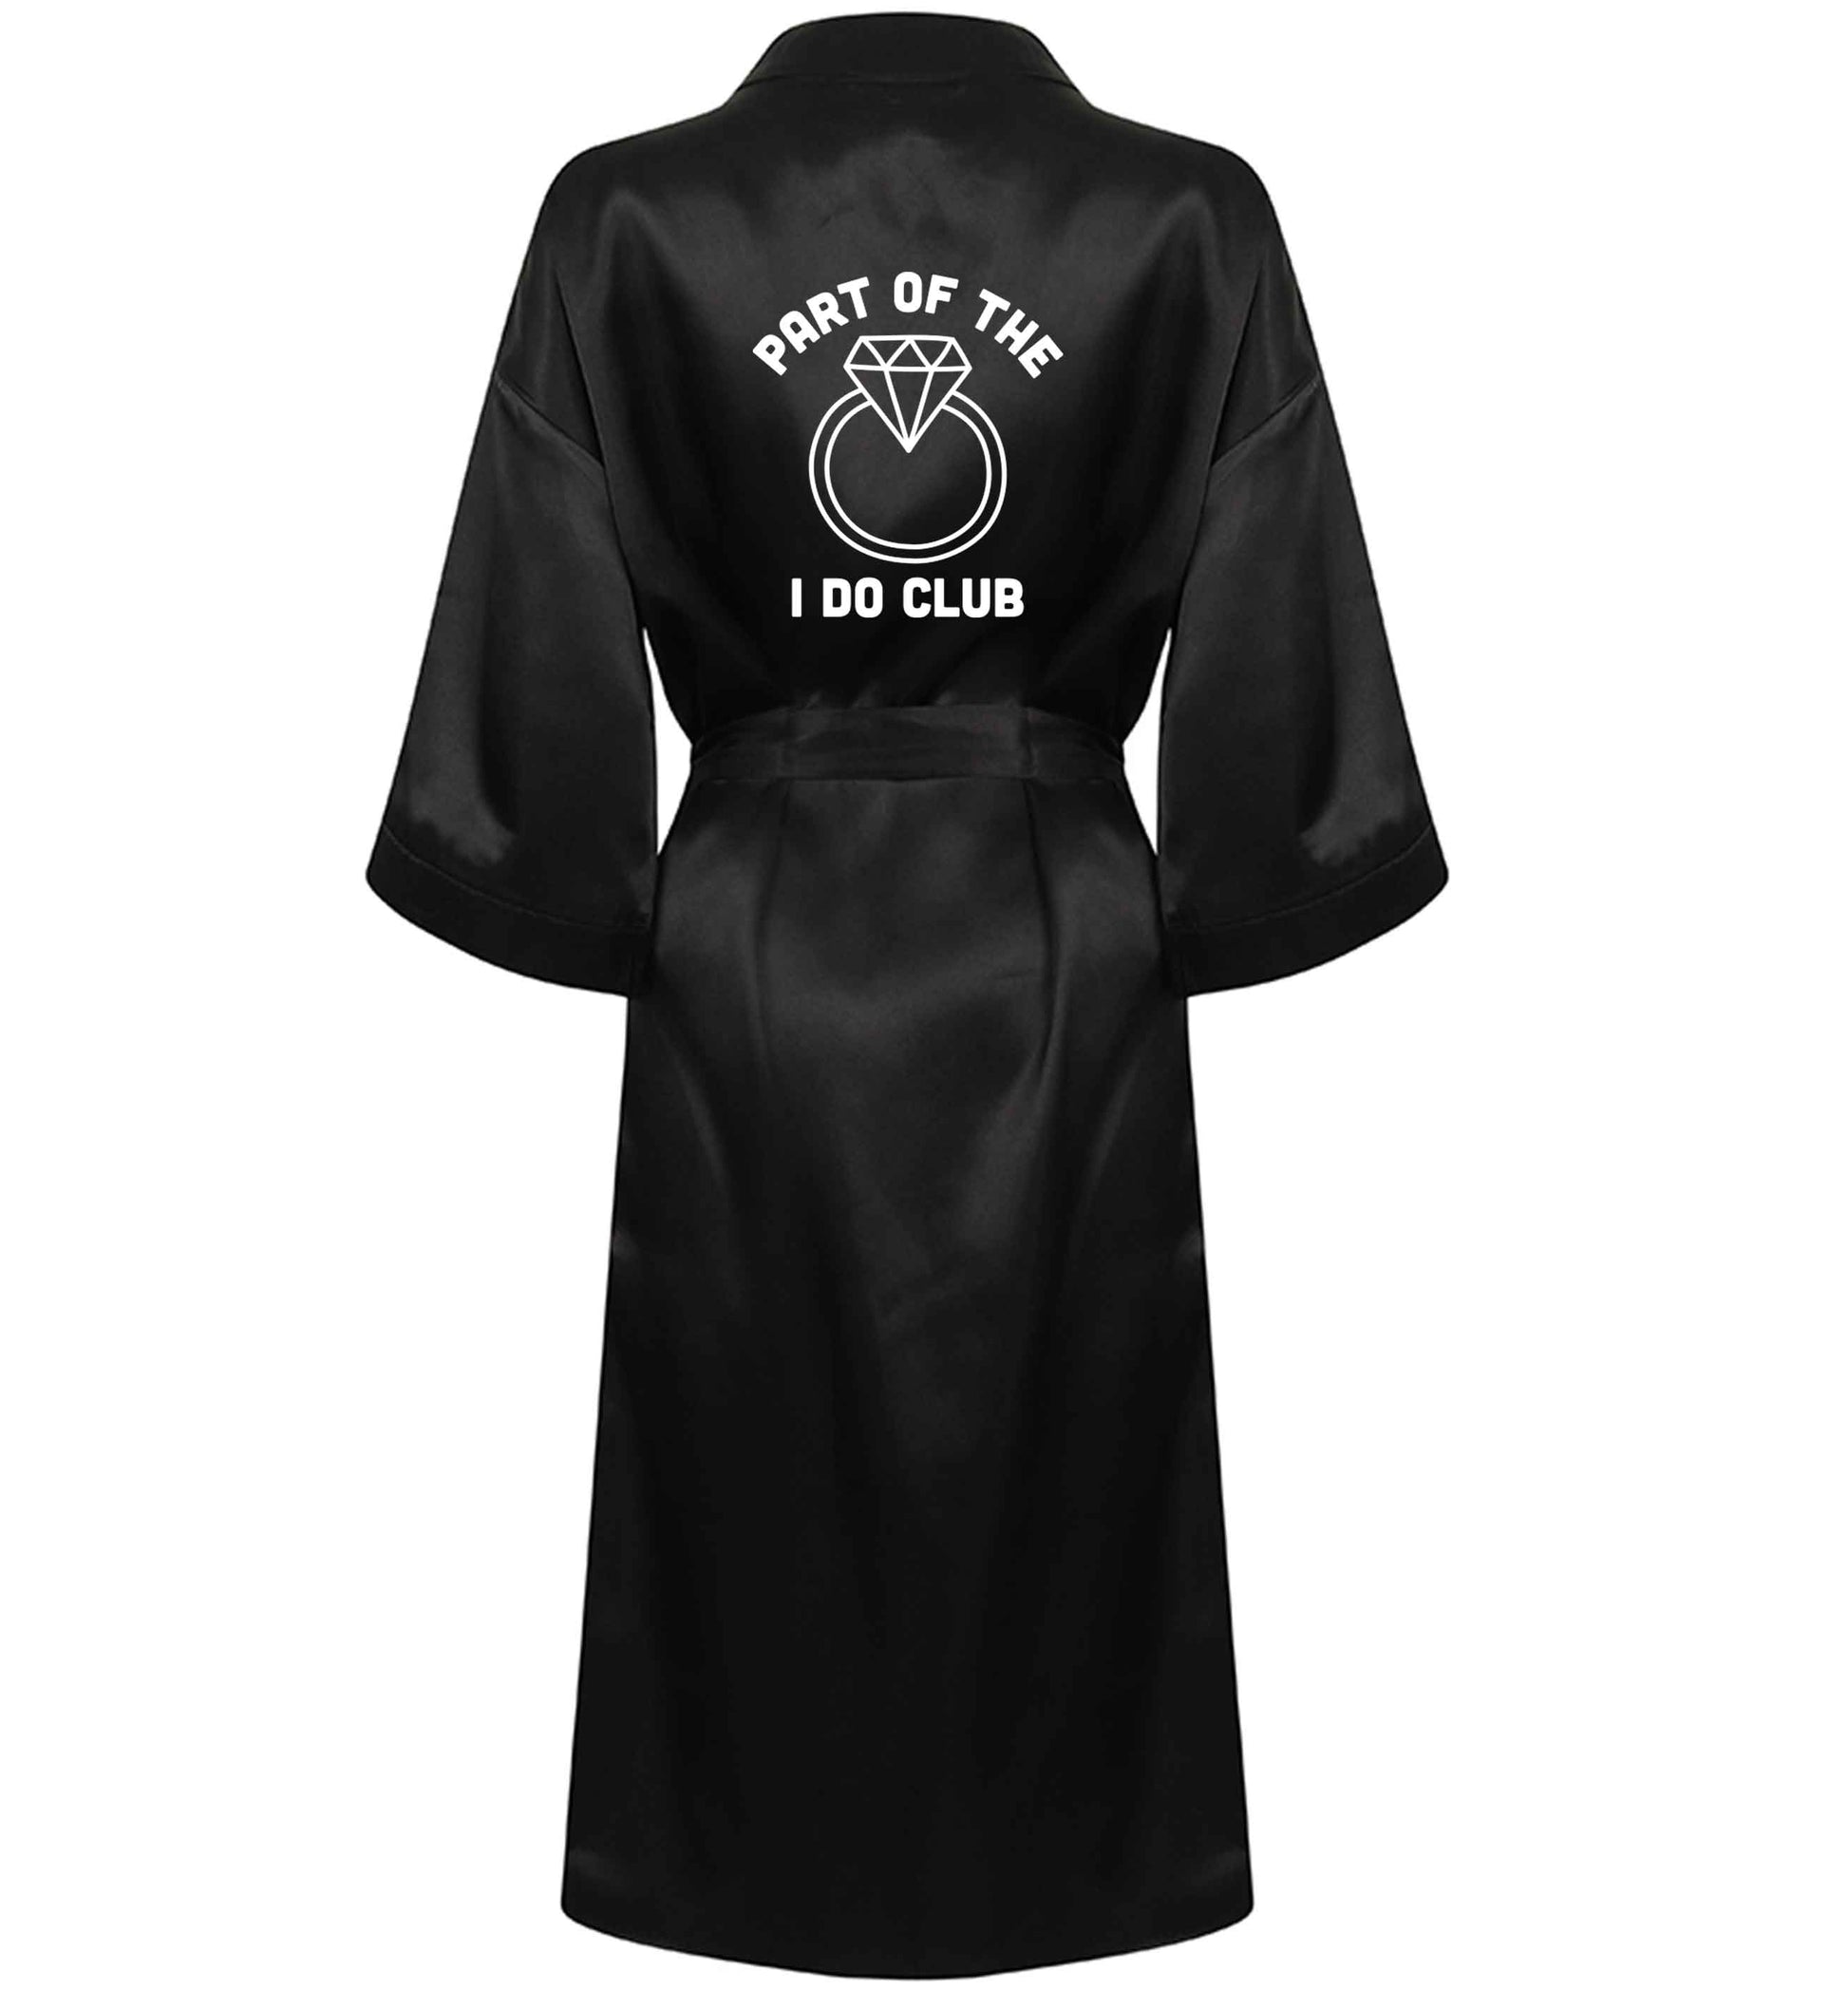 Part of the I do club XL/XXL black ladies dressing  gown size 16/18